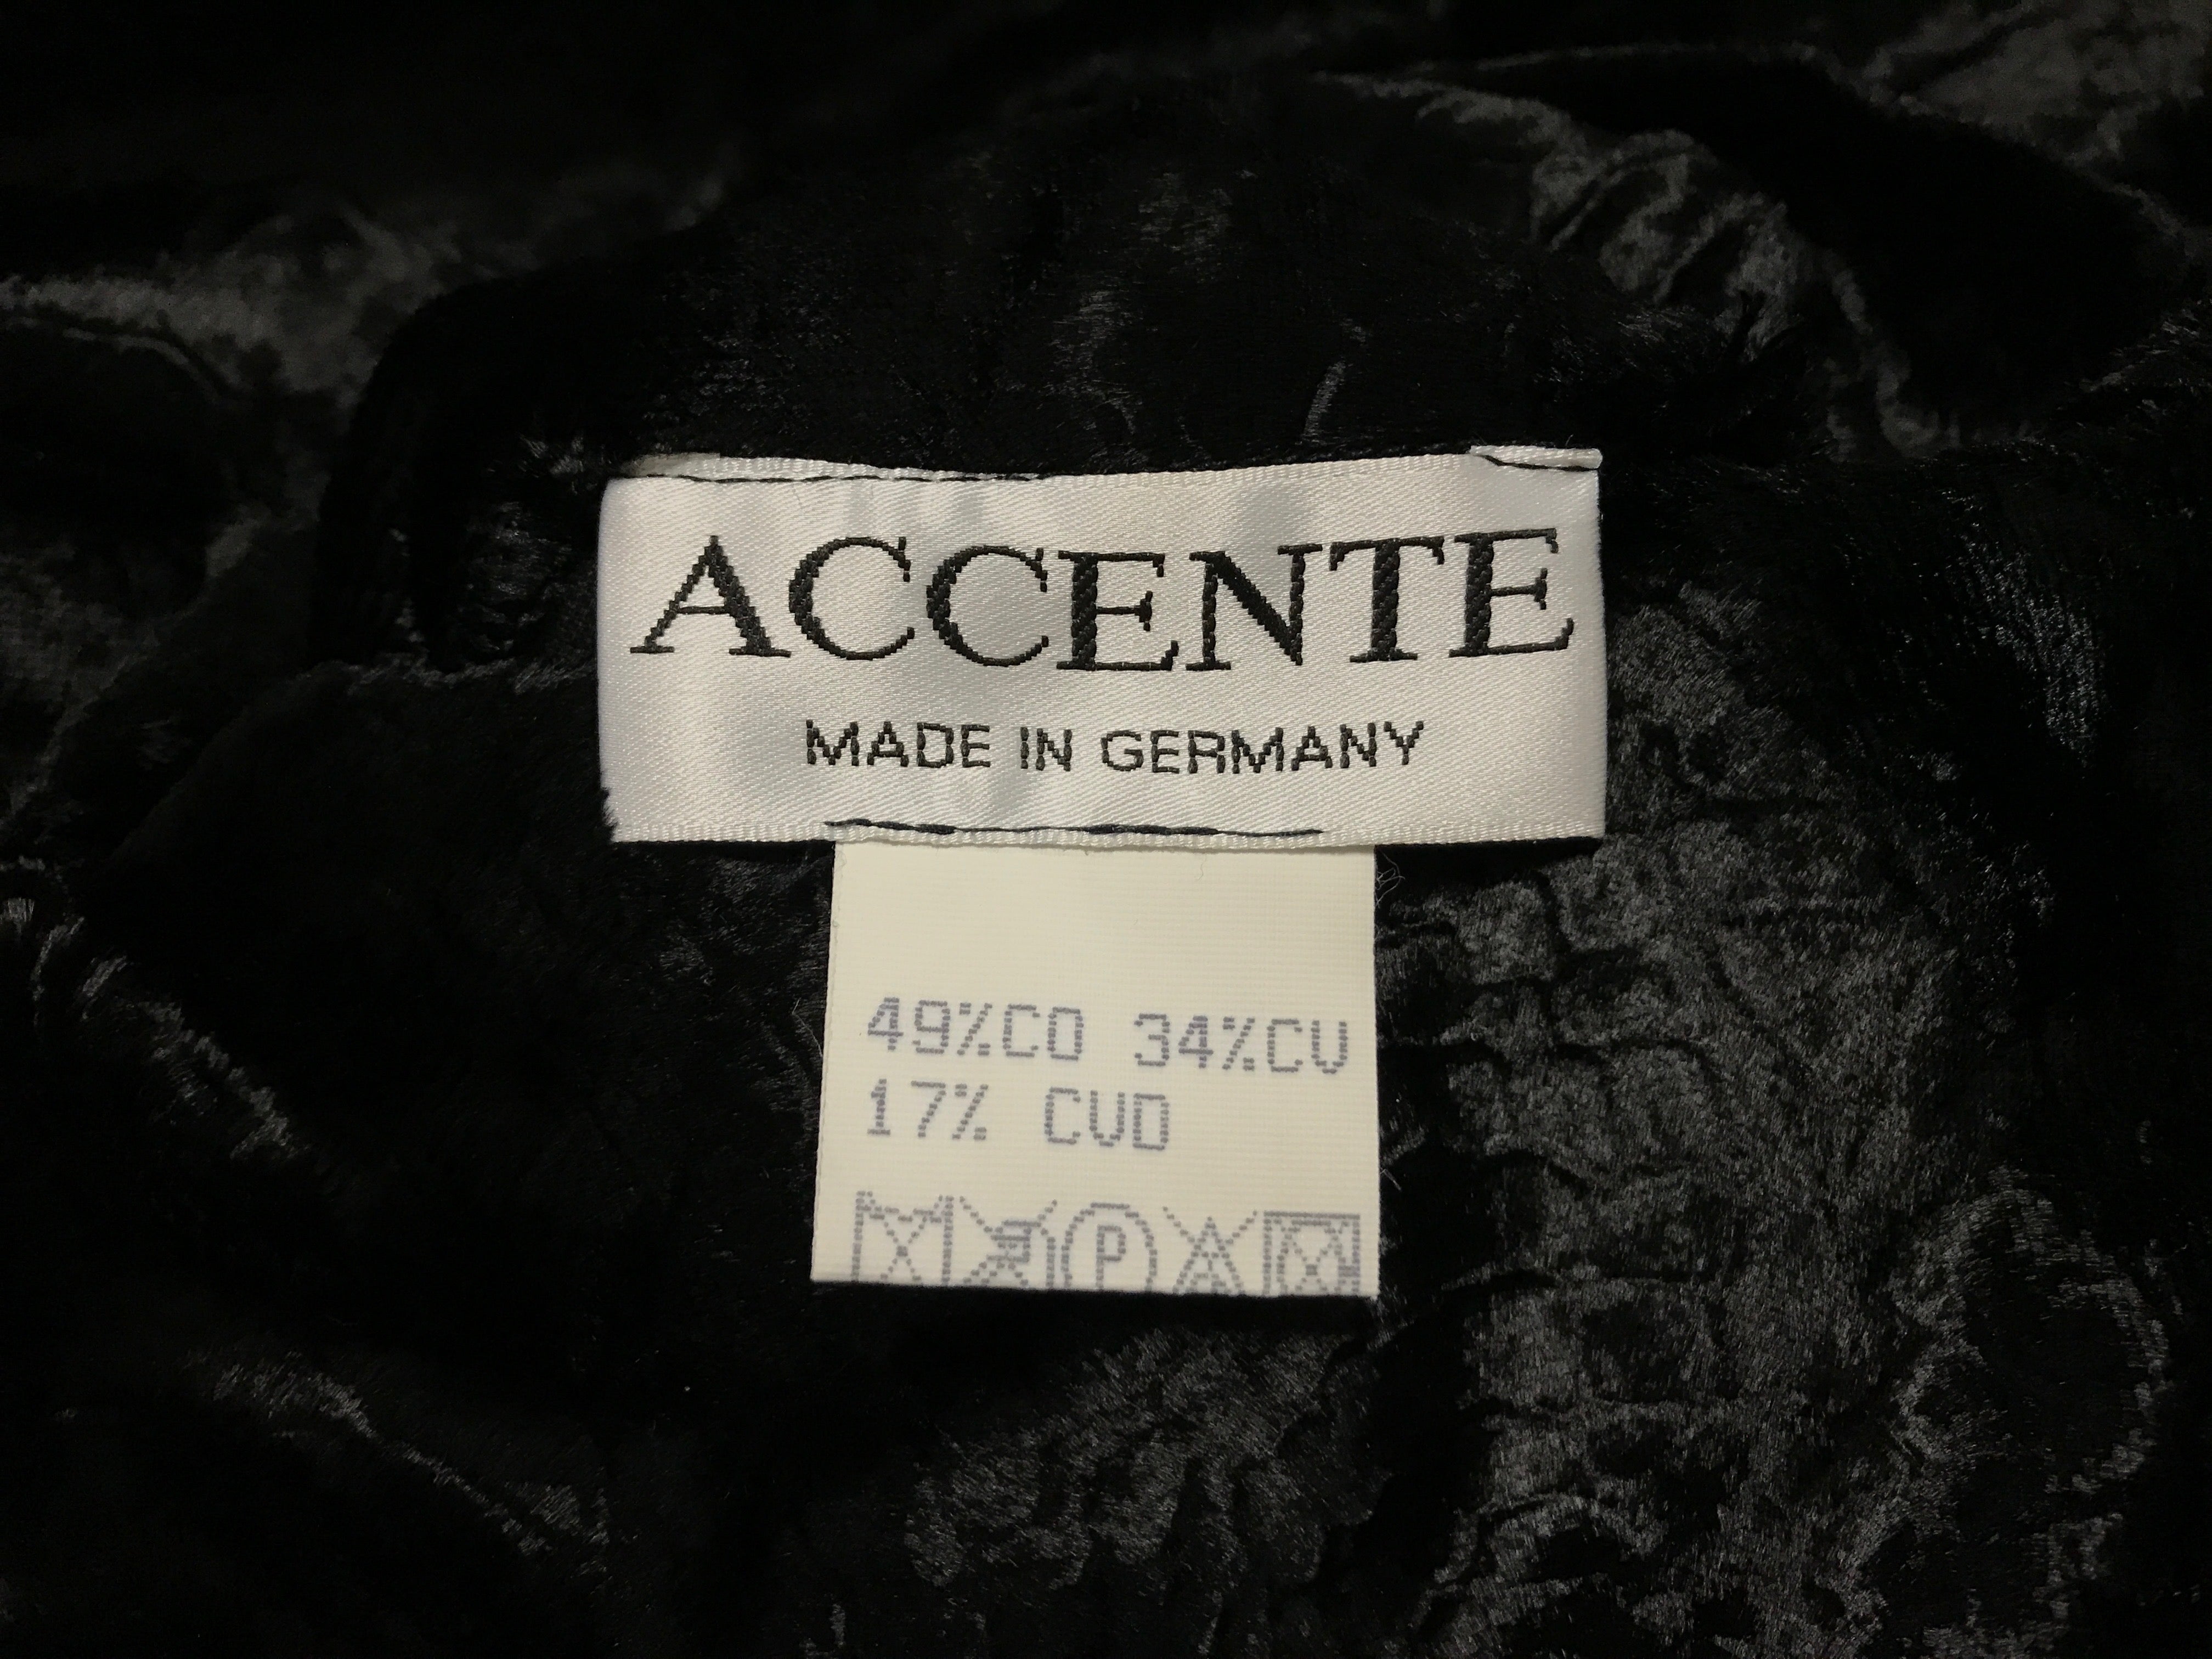 German label faux-fur shawl collar deformed jacket